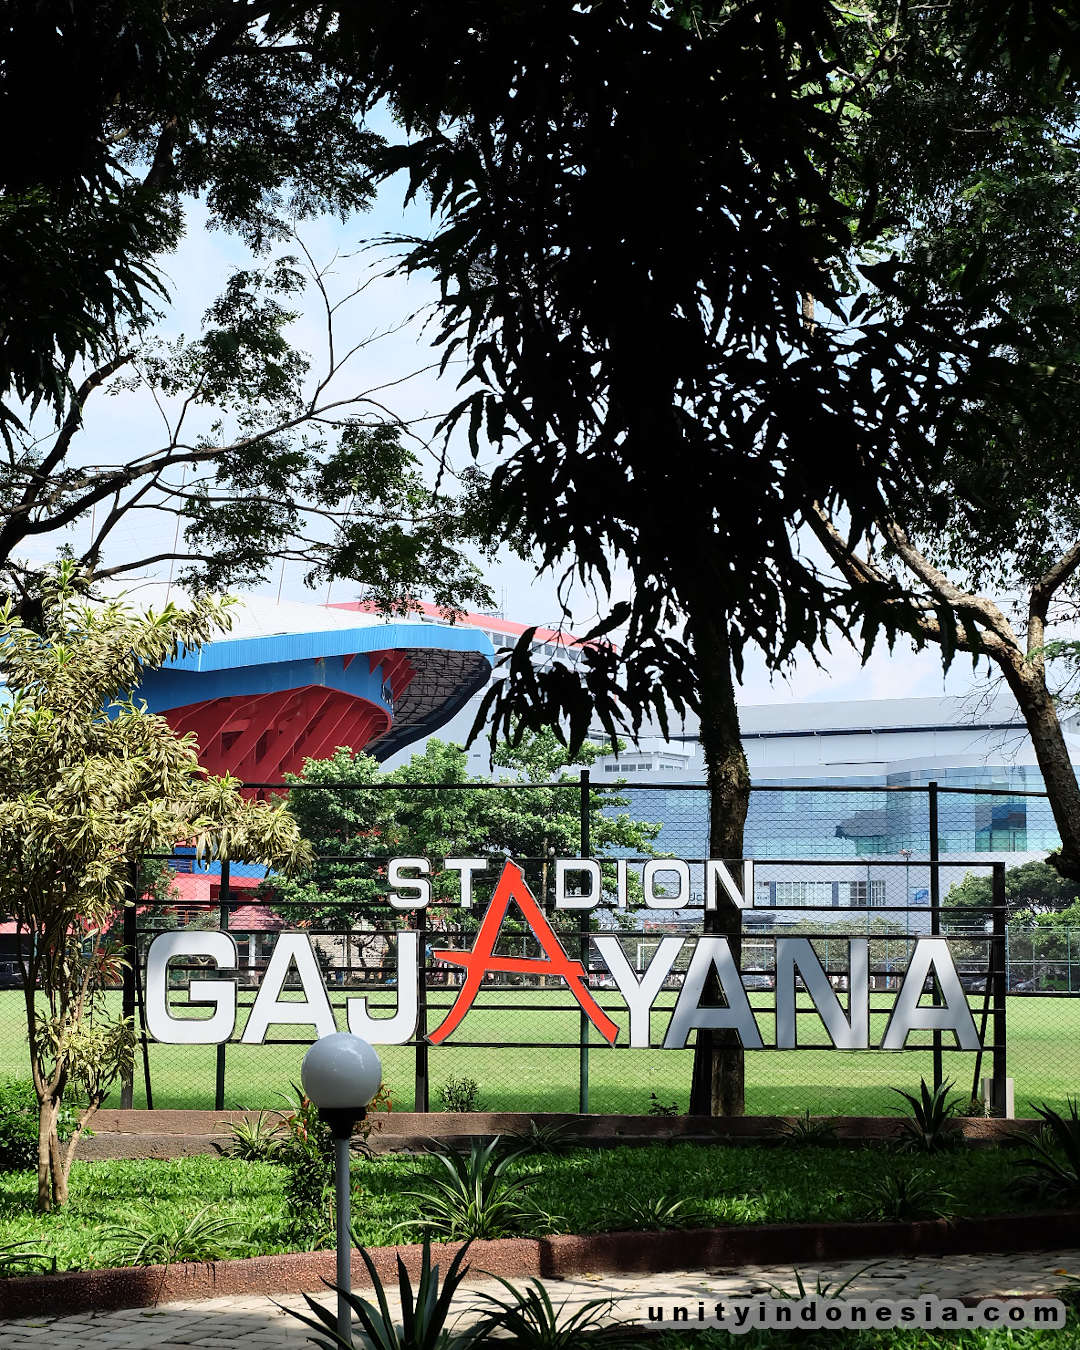 Stadion Gajayana in Boulevard Ijen, Malang, Indonesia.